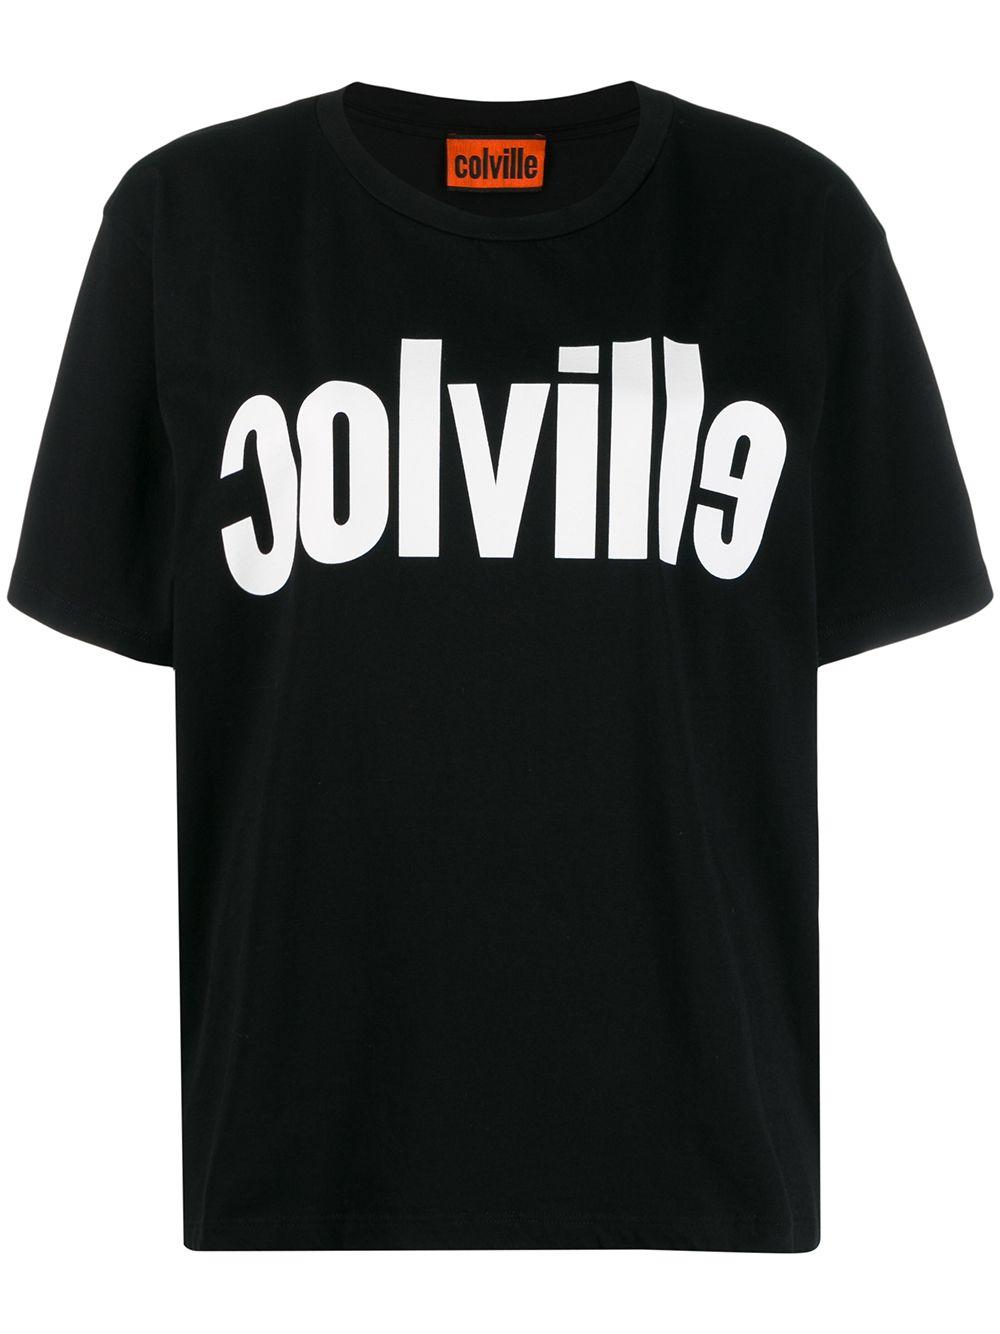 Colville Cotton Logo Print T-shirt in Black White (Black) - Save 59% - Lyst